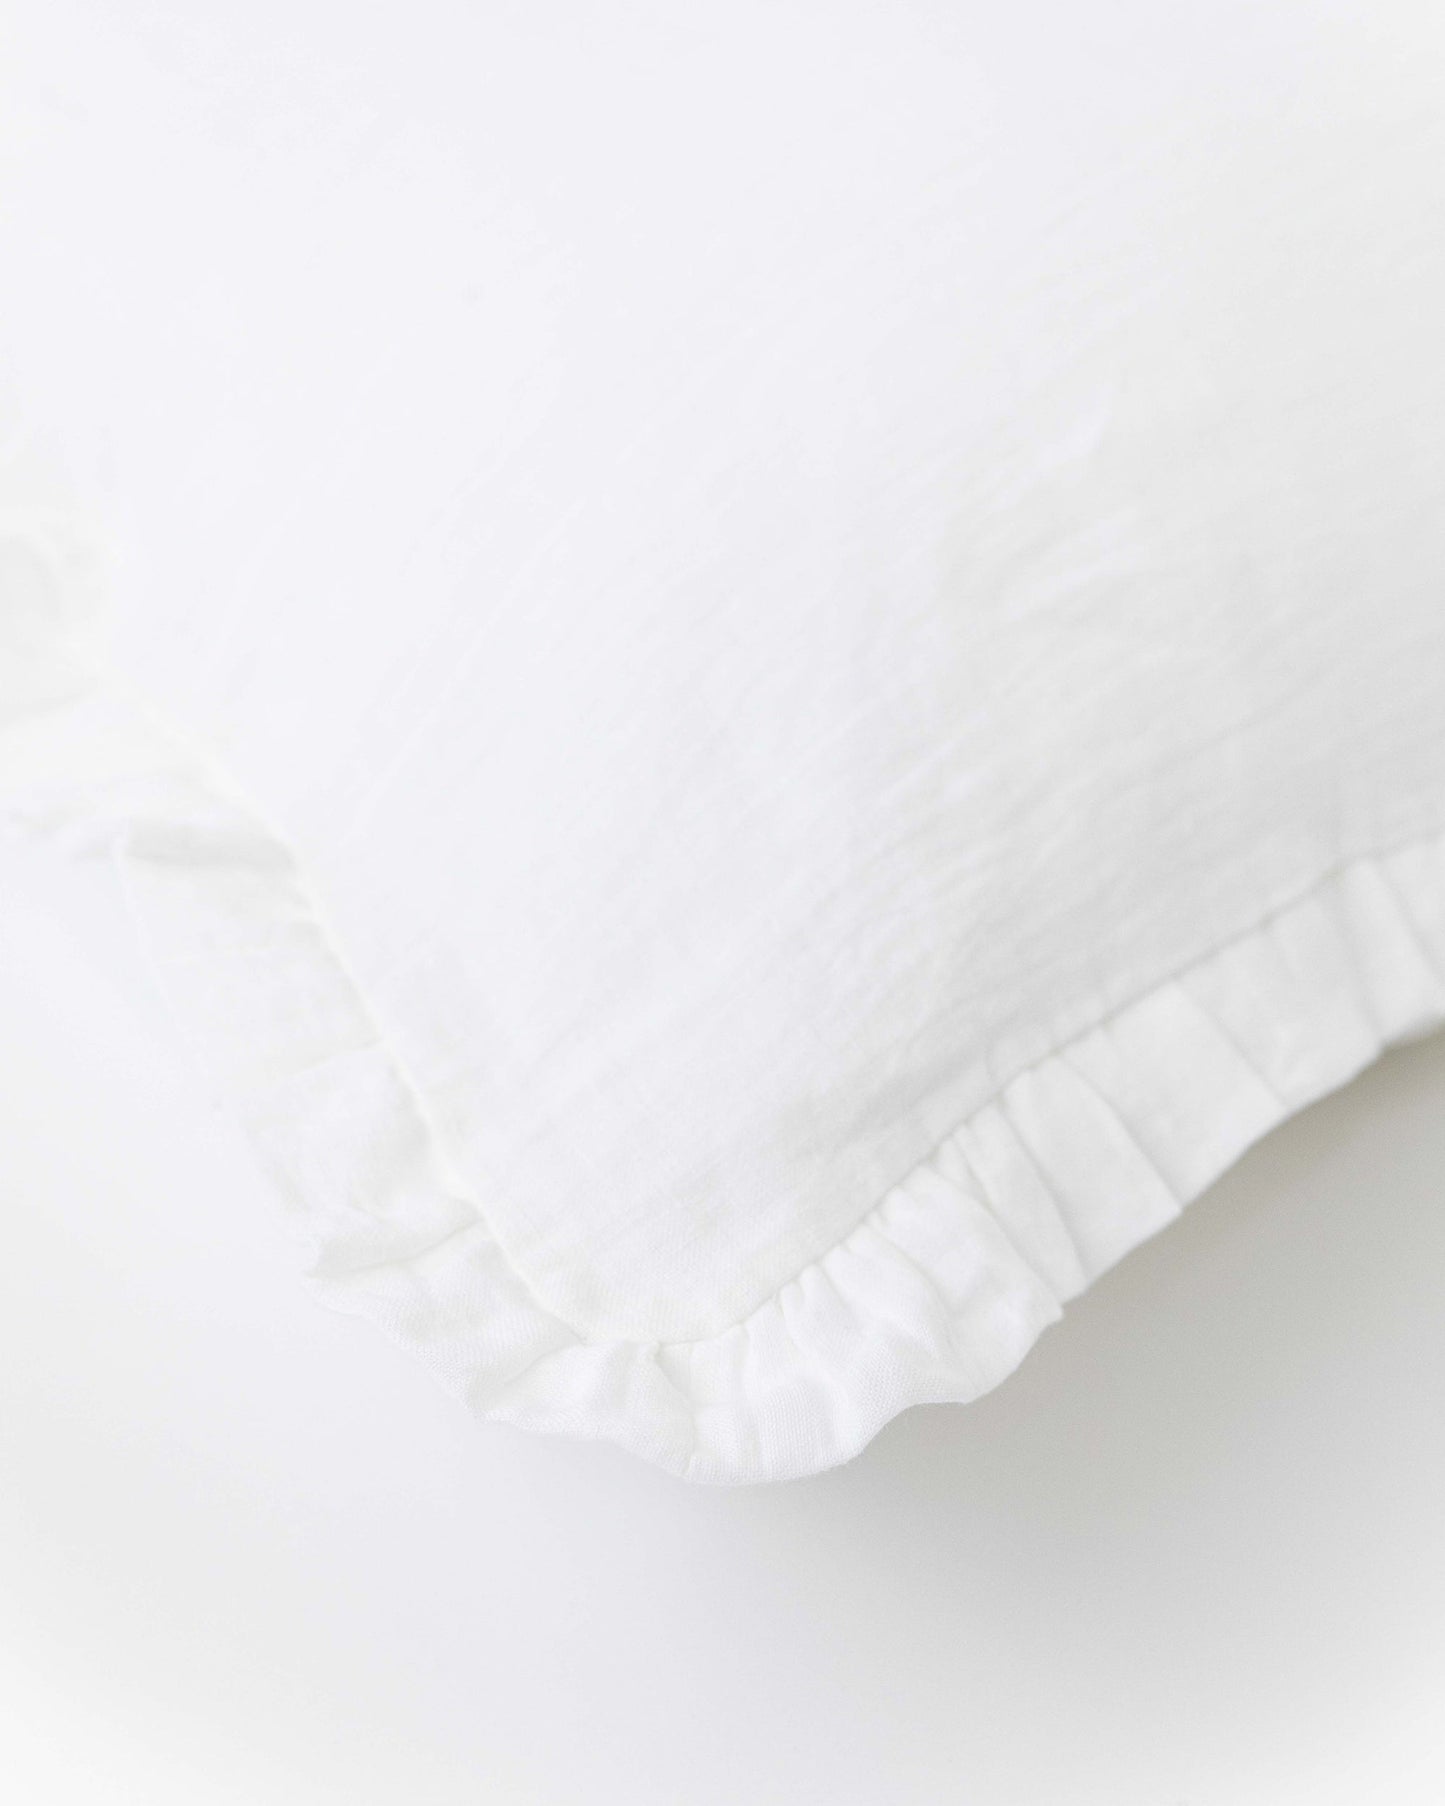 Ruffle trim linen pillowcase in Ivory - MagicLinen